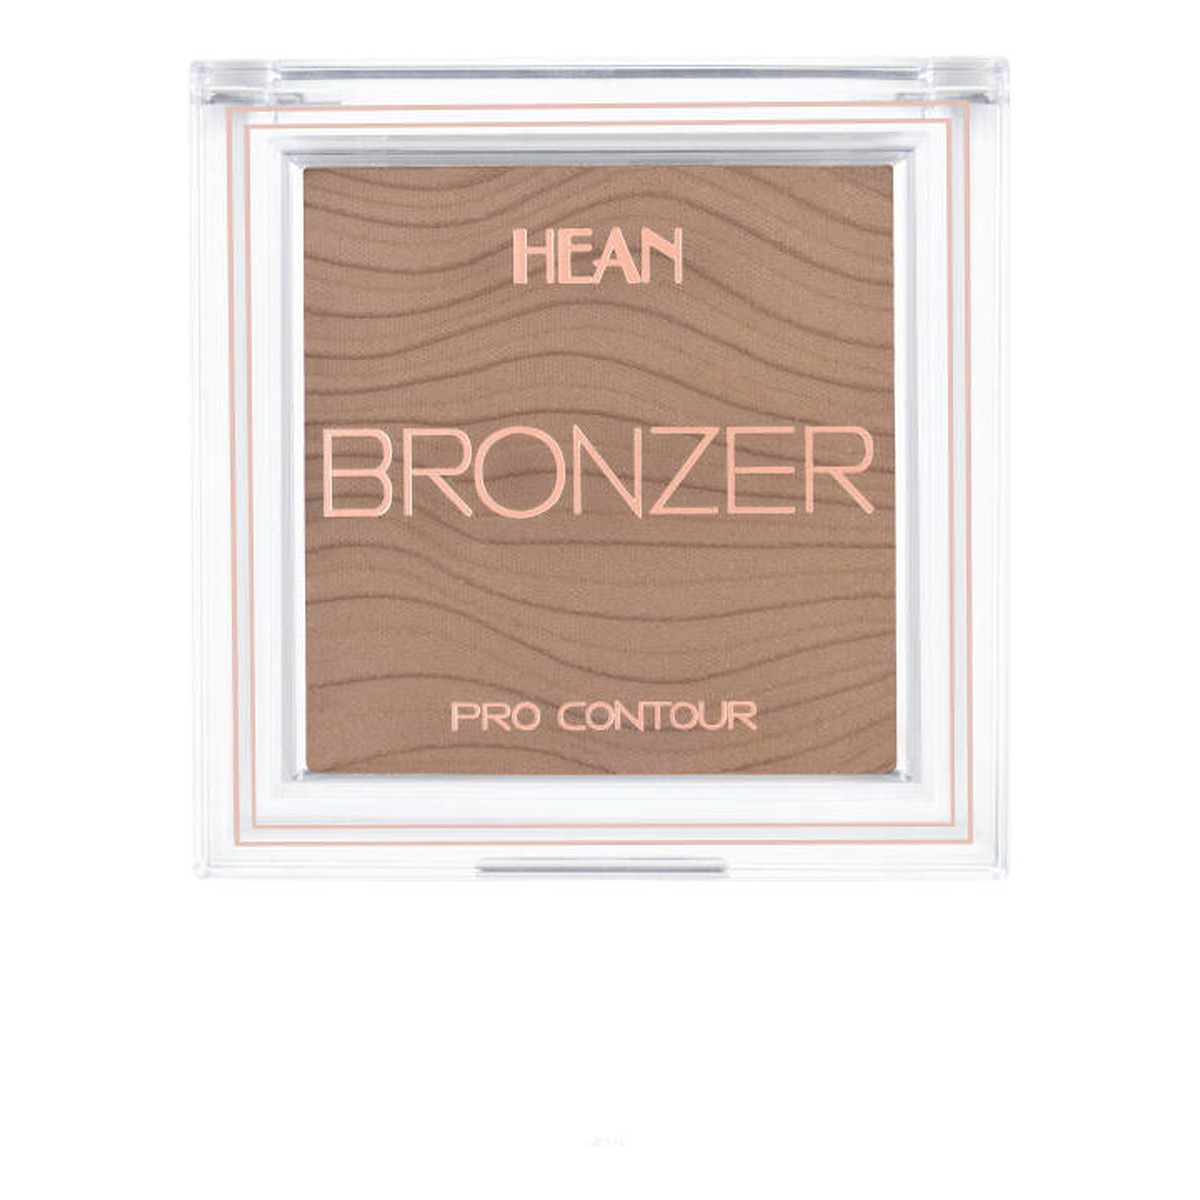 Hean Bronzer Pro-Contour 9g